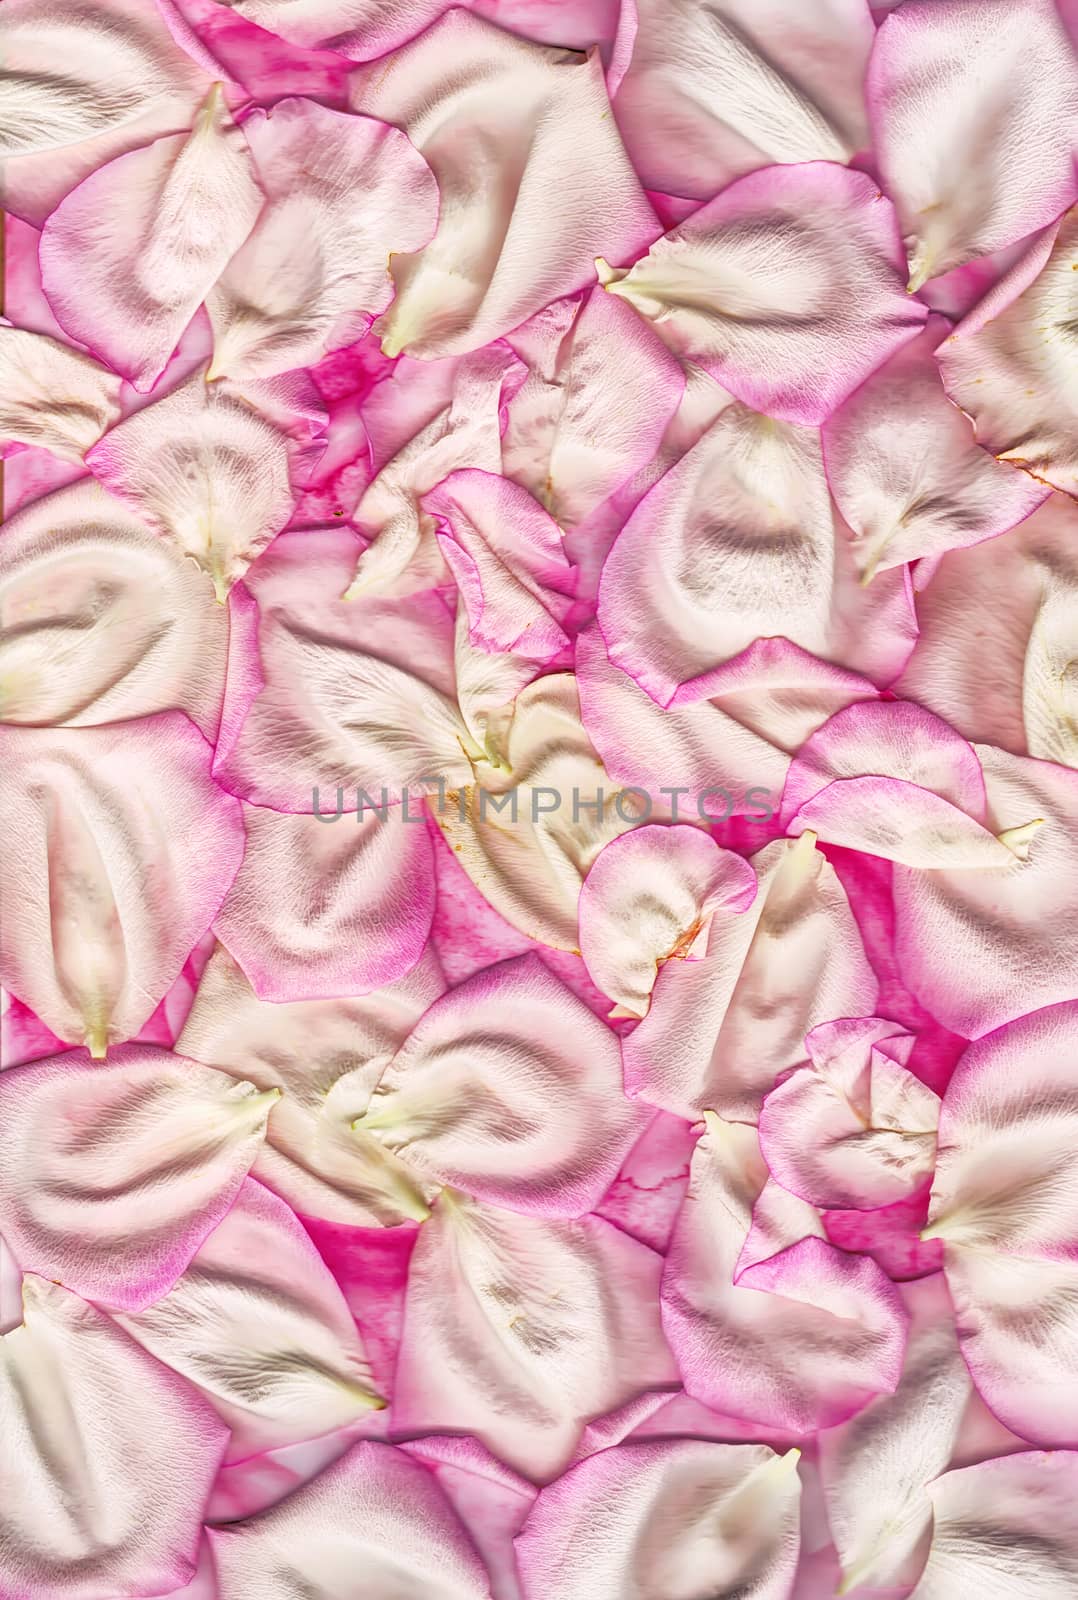 rose petals background by CherJu